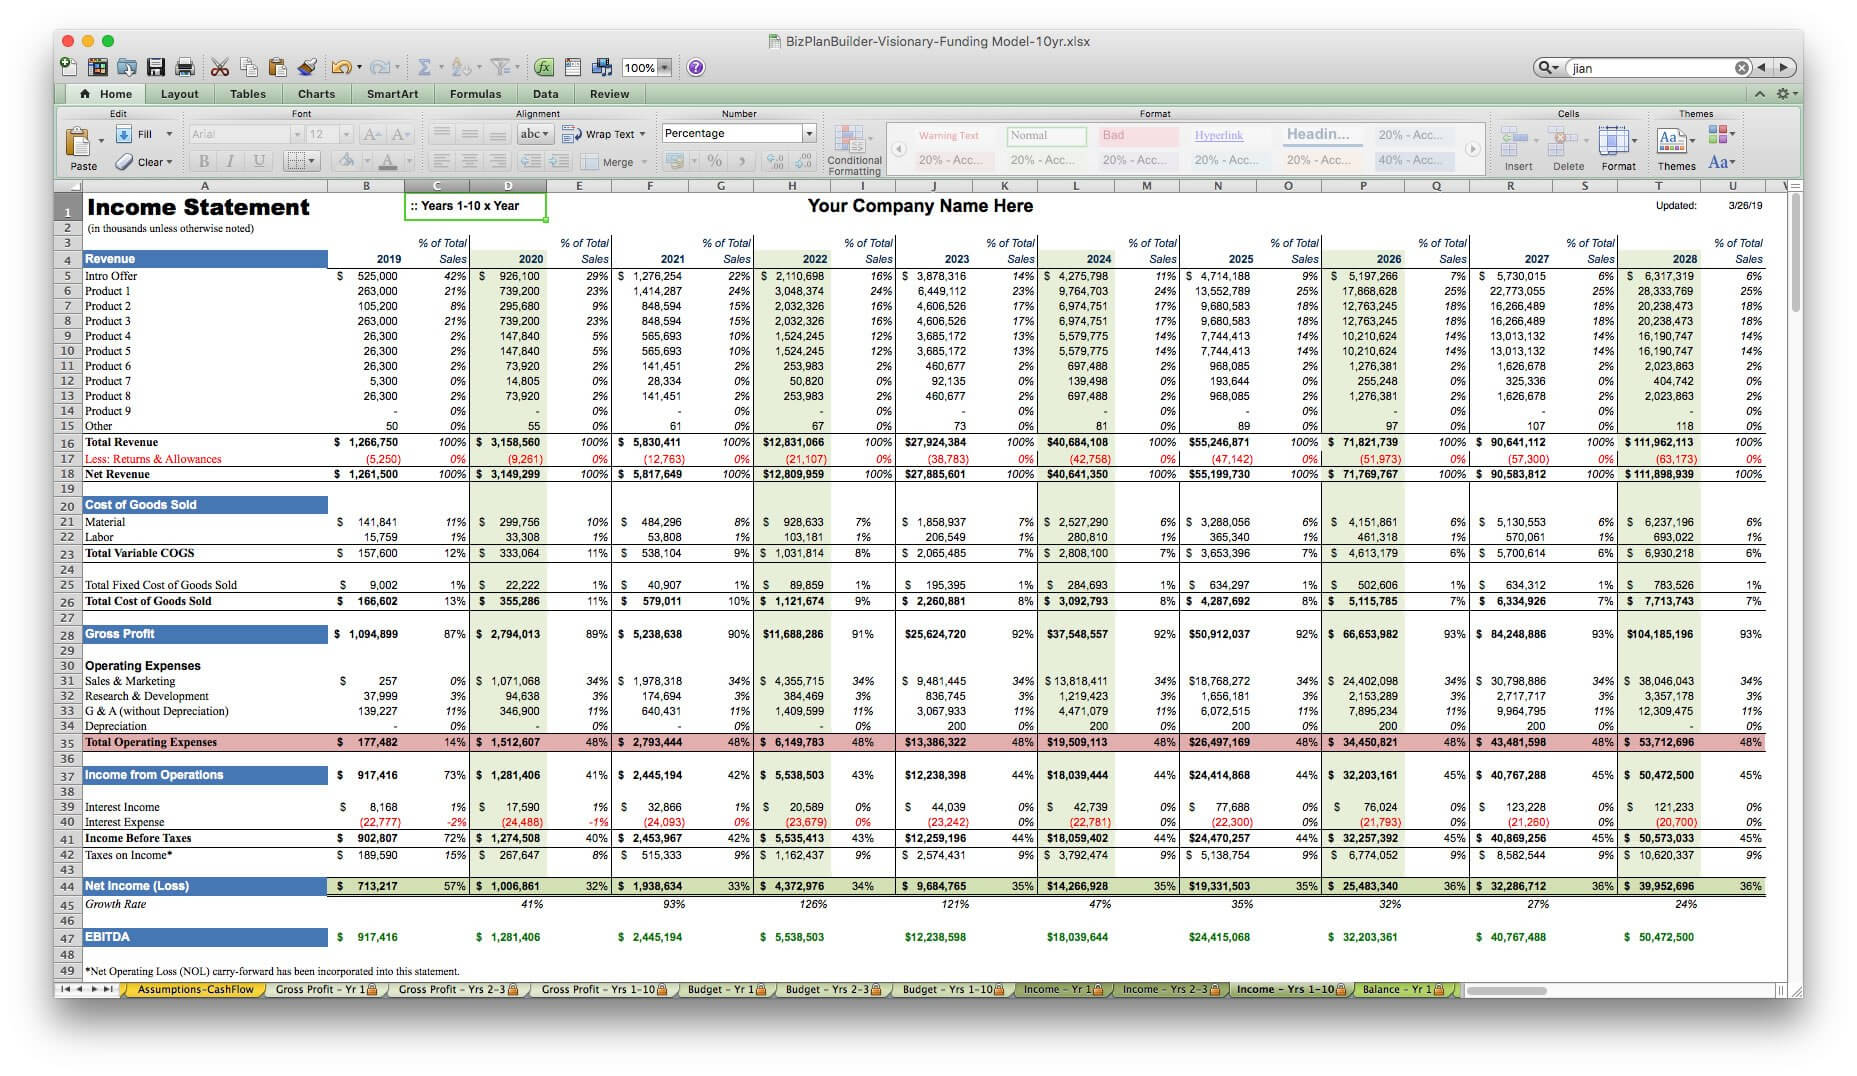 008 Business Plan Spreadsheet Template Excel Financial For Business Plan Spreadsheet Template Excel